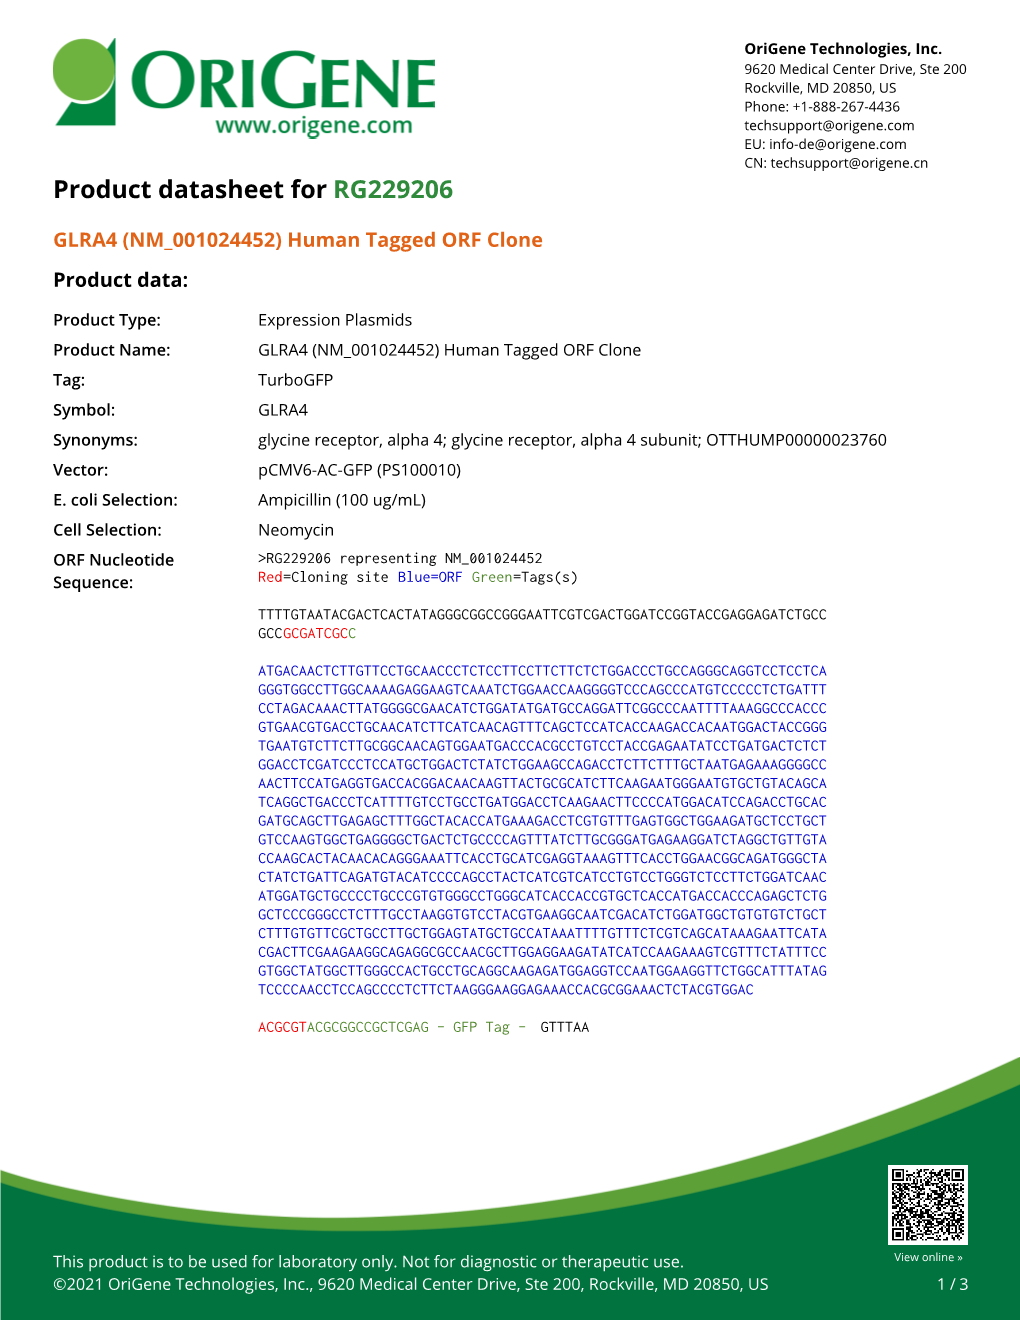 GLRA4 (NM 001024452) Human Tagged ORF Clone – RG229206